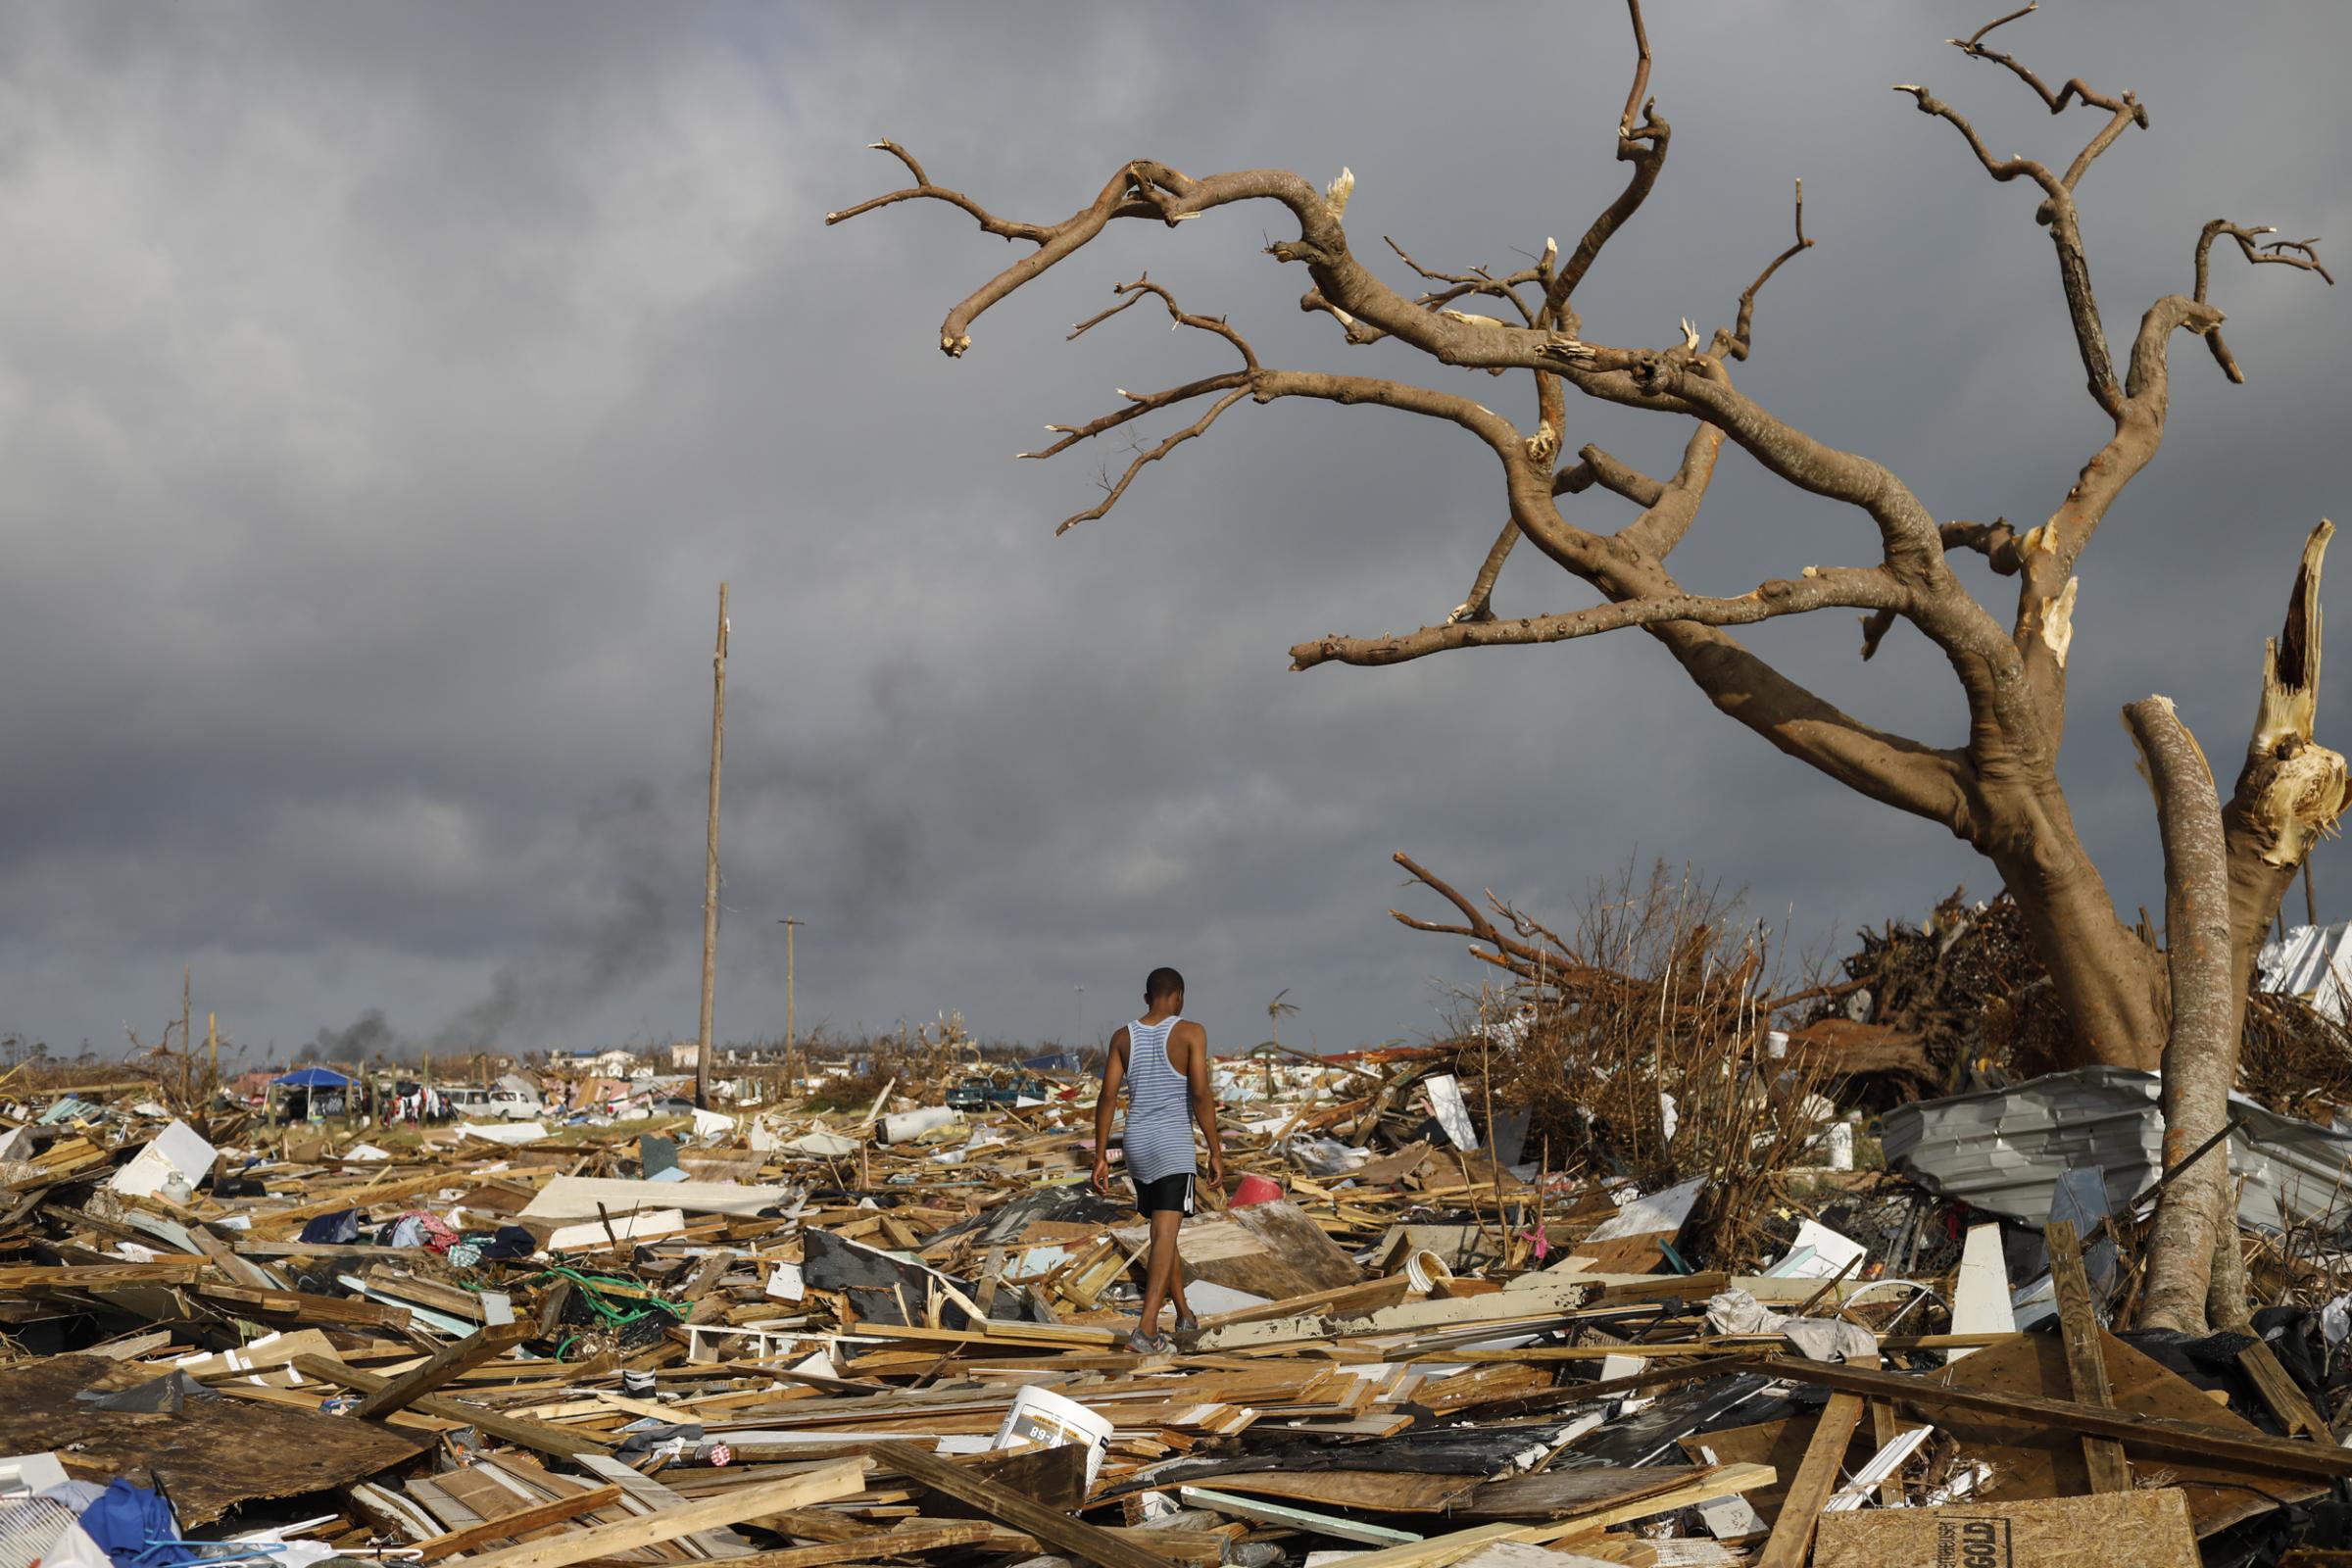 slideshow - A man walks among debris at The Mud neighborhood, devastated after Hurricane Dorian hit the Abaco...